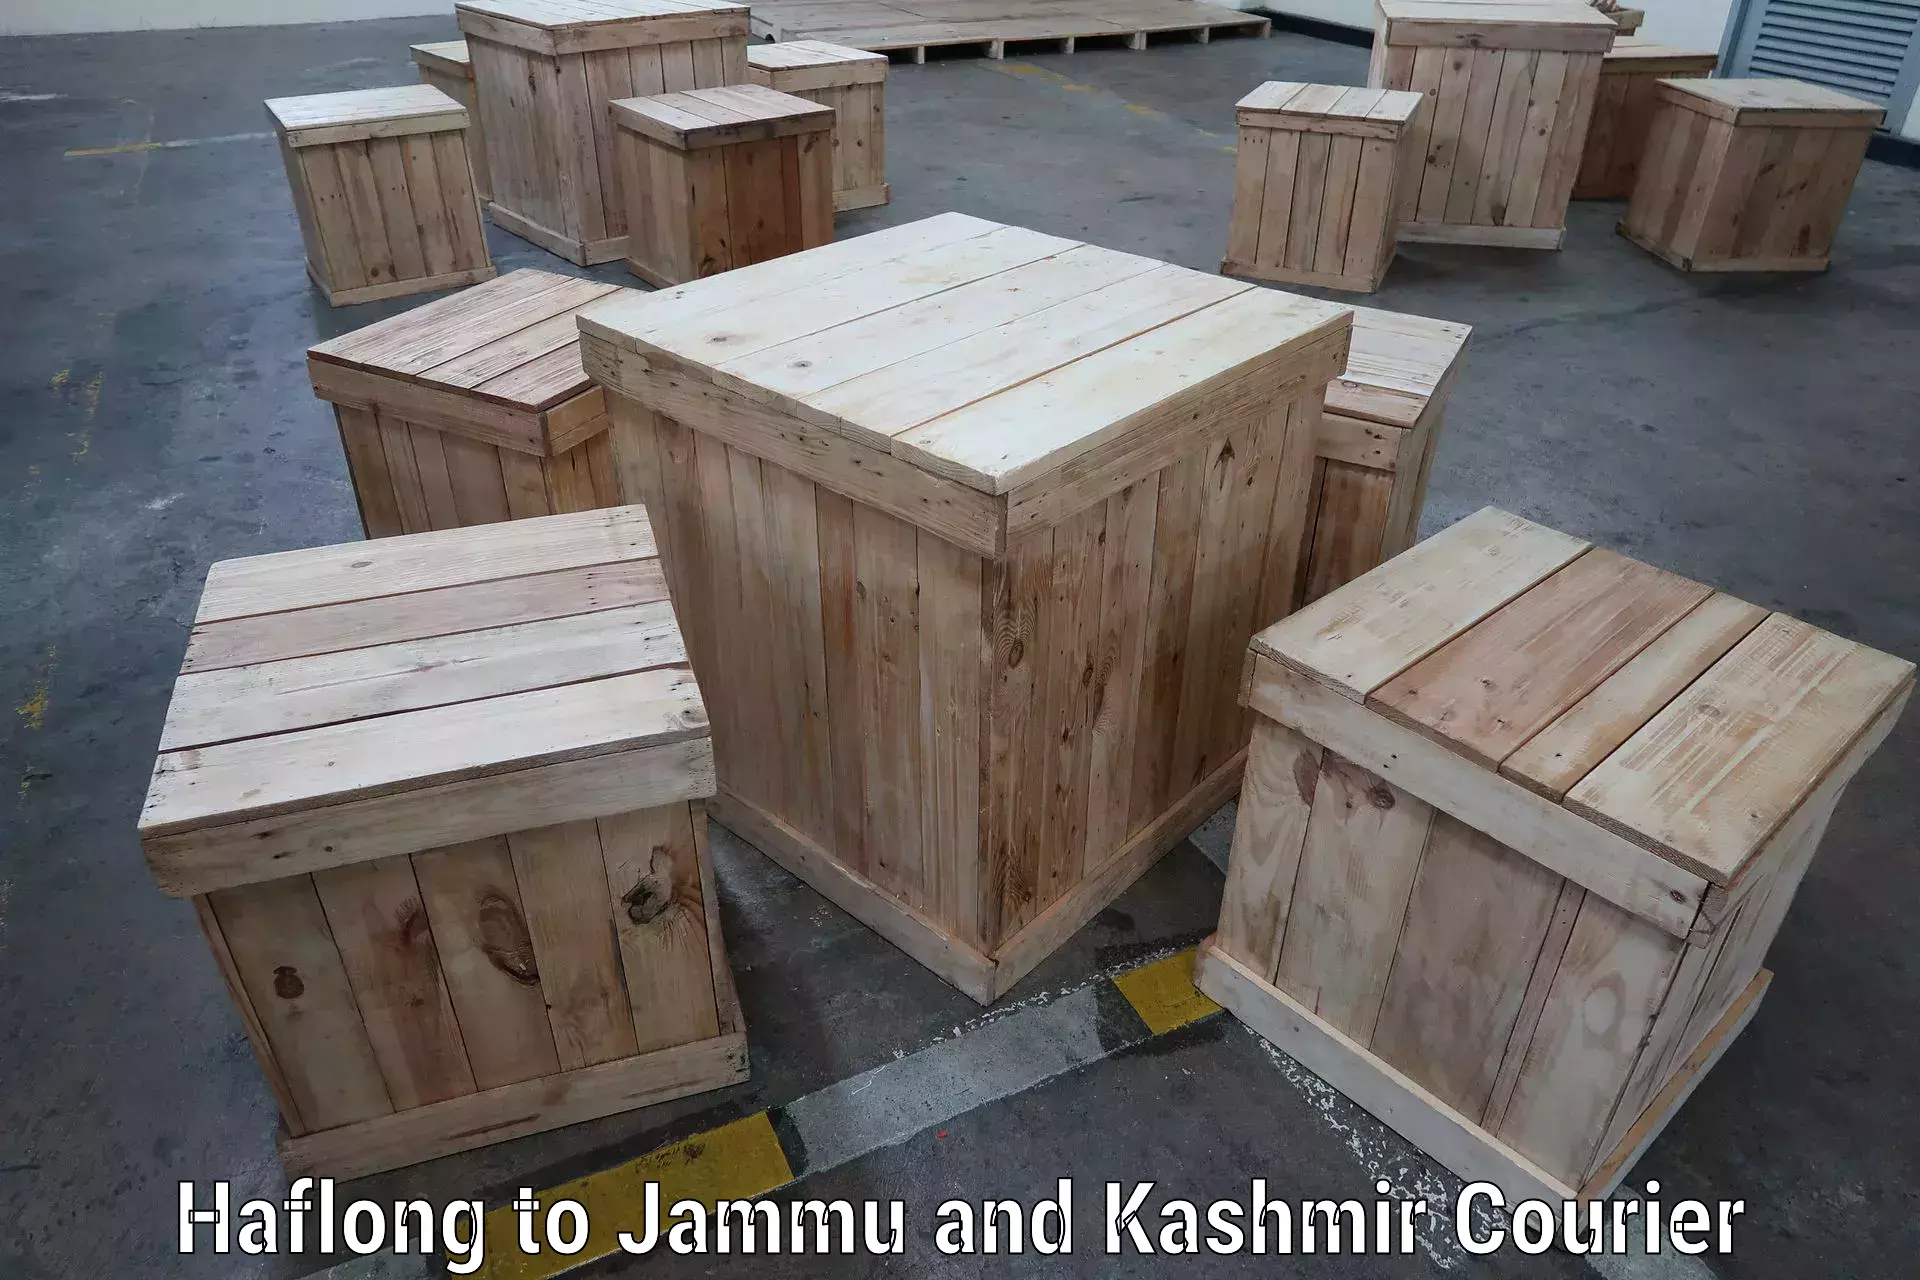 Courier service partnerships Haflong to Jammu and Kashmir